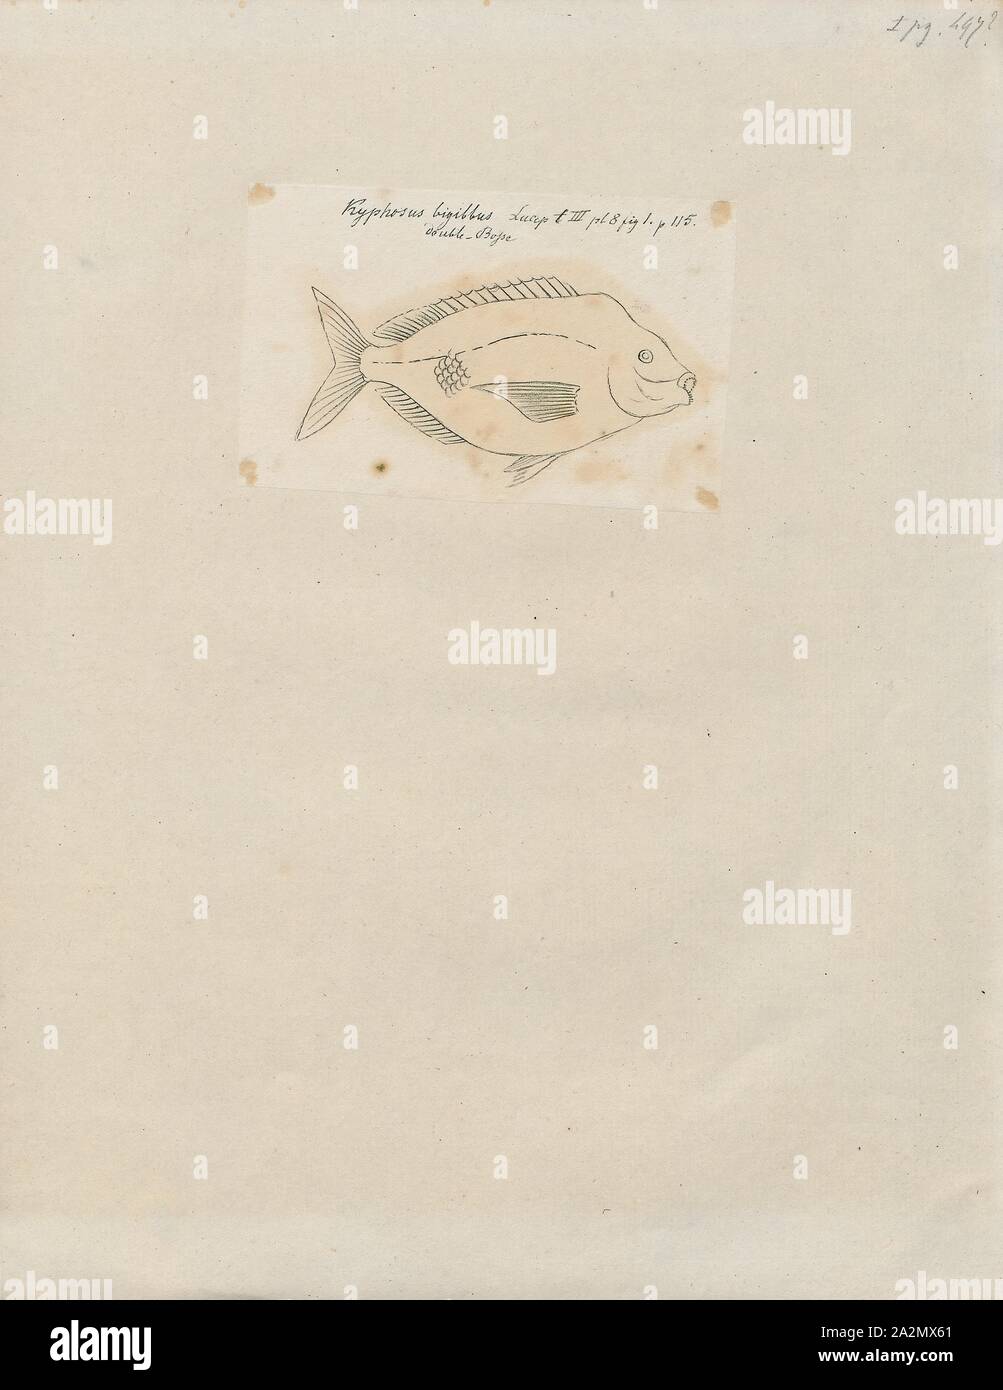 Kyphosus bigibbus, Print, The brown chub (Kyphosus bigibbus) is a species of sea chub found in tropical oceans worldwide., 1700-1880 Stock Photo